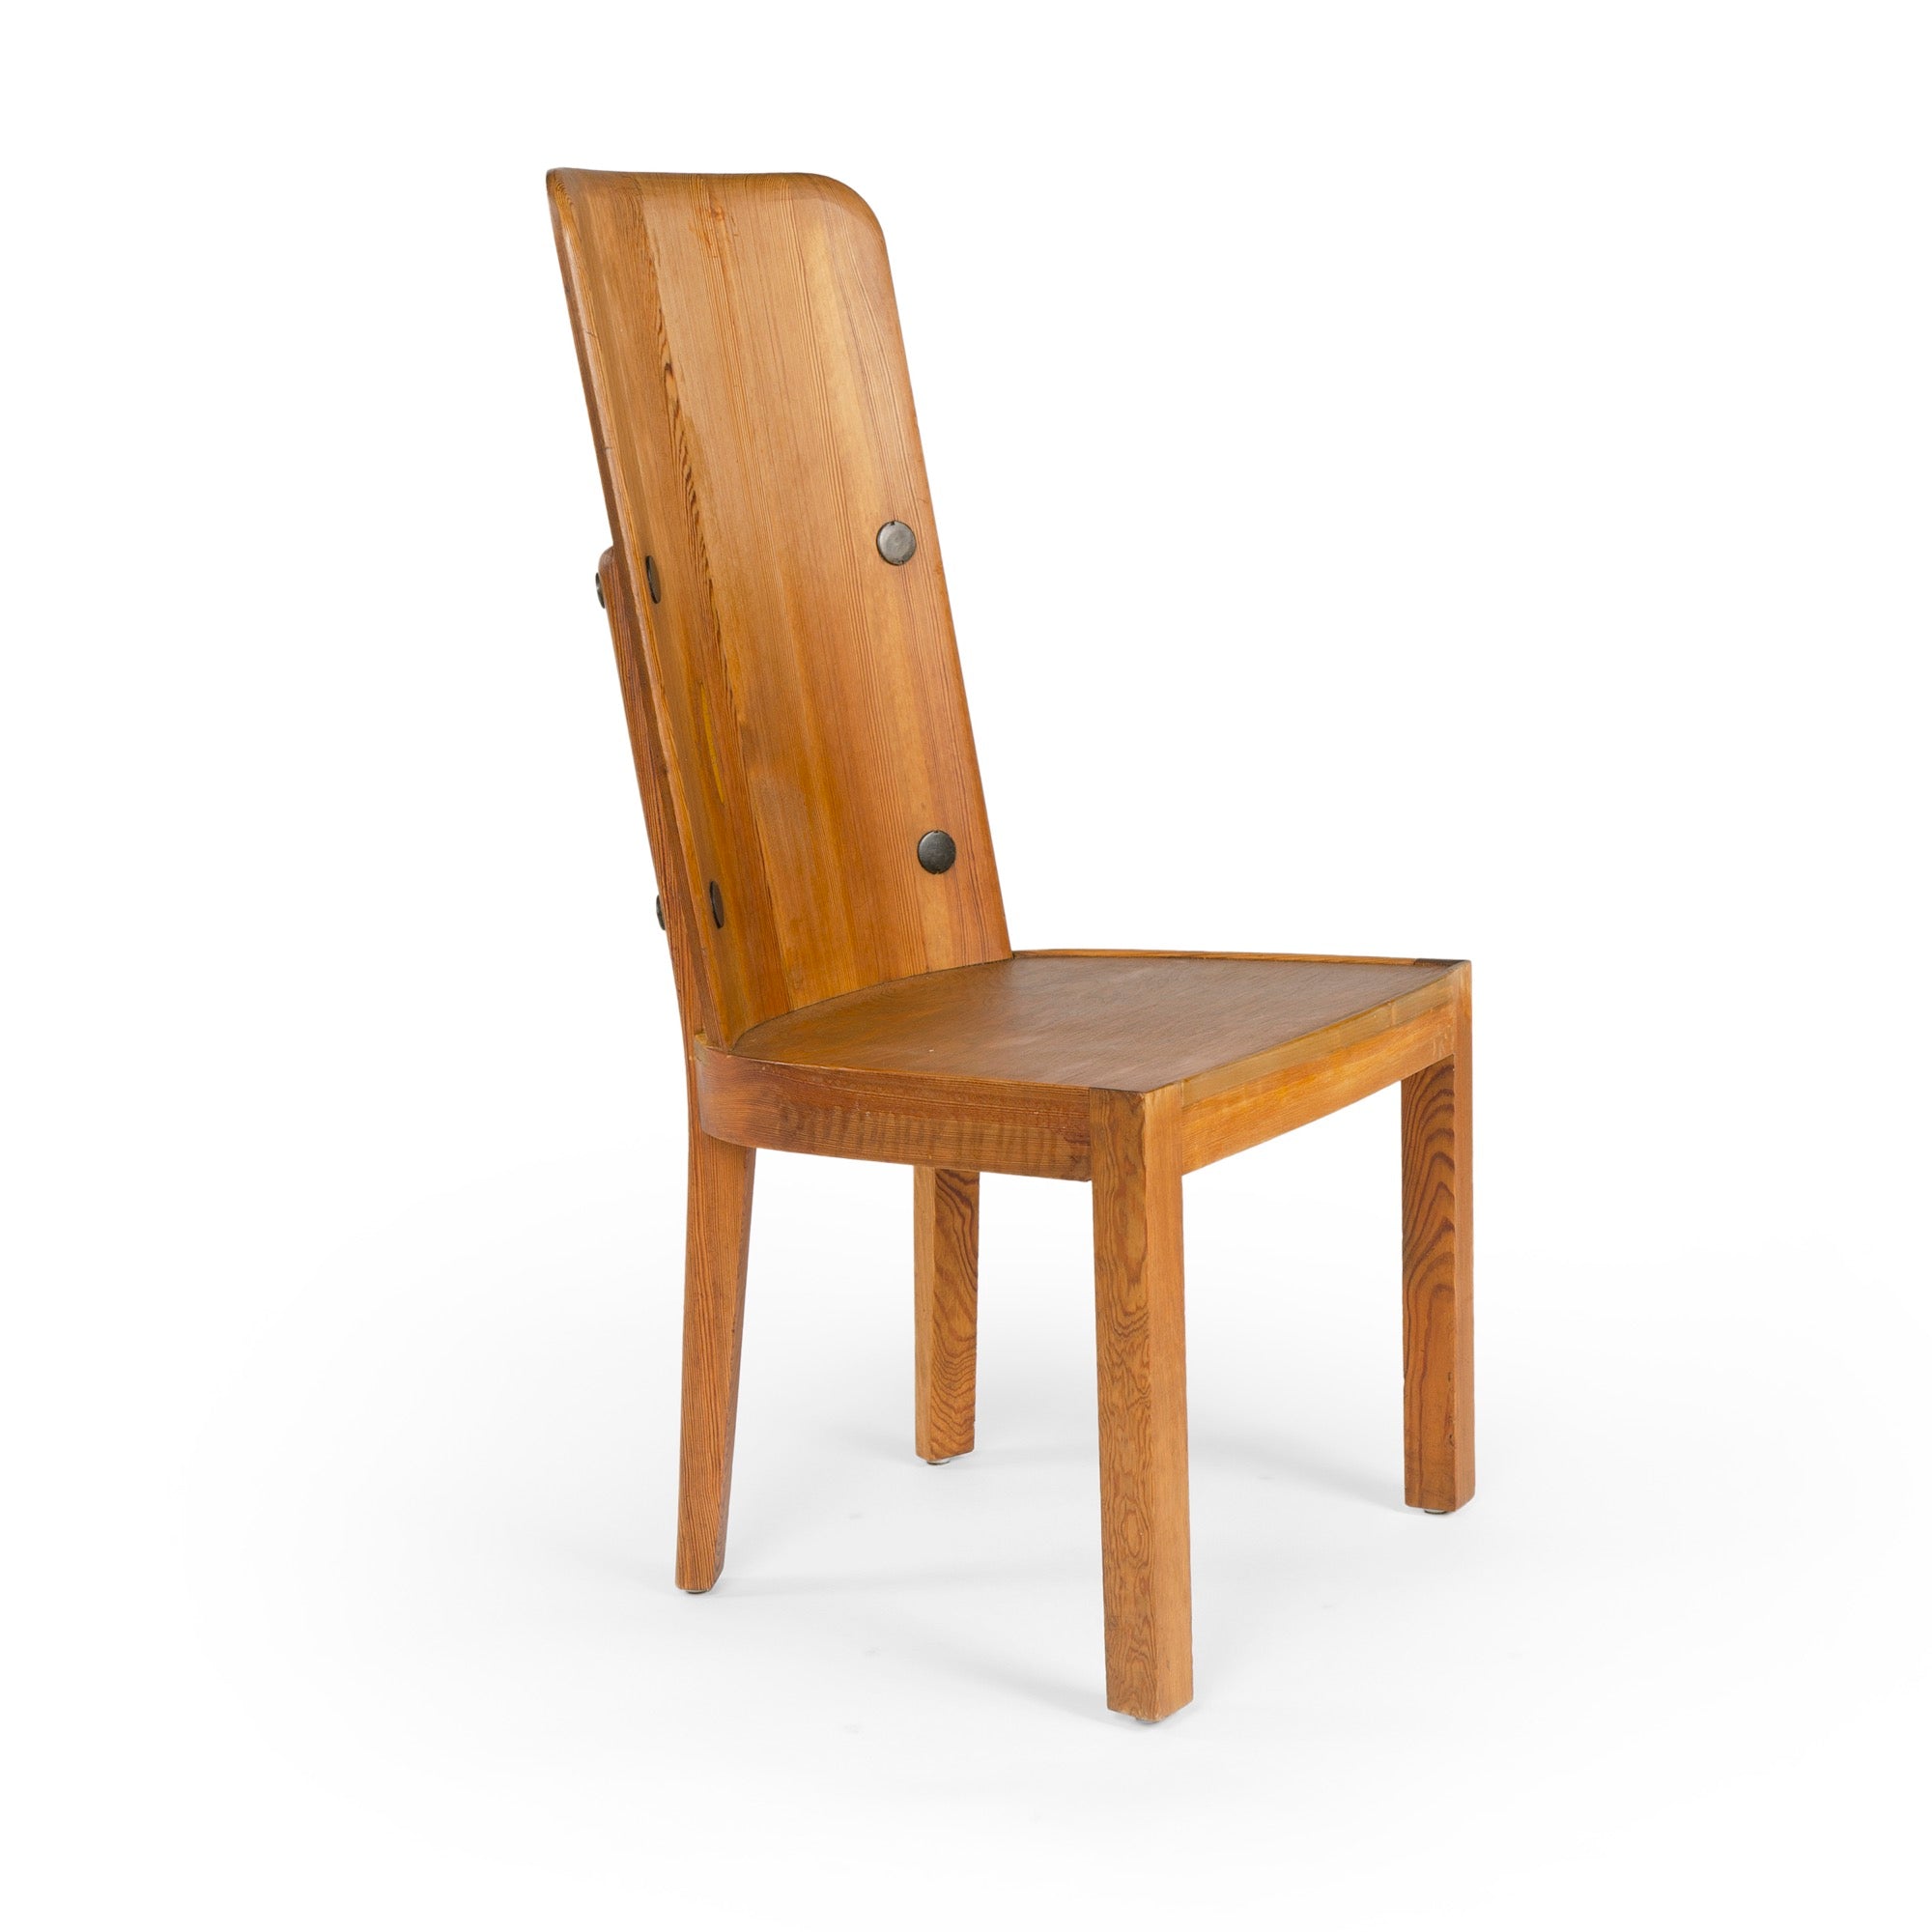 Dining Chairs by Axel Einar Hjorth for Nordiska Kompaniet